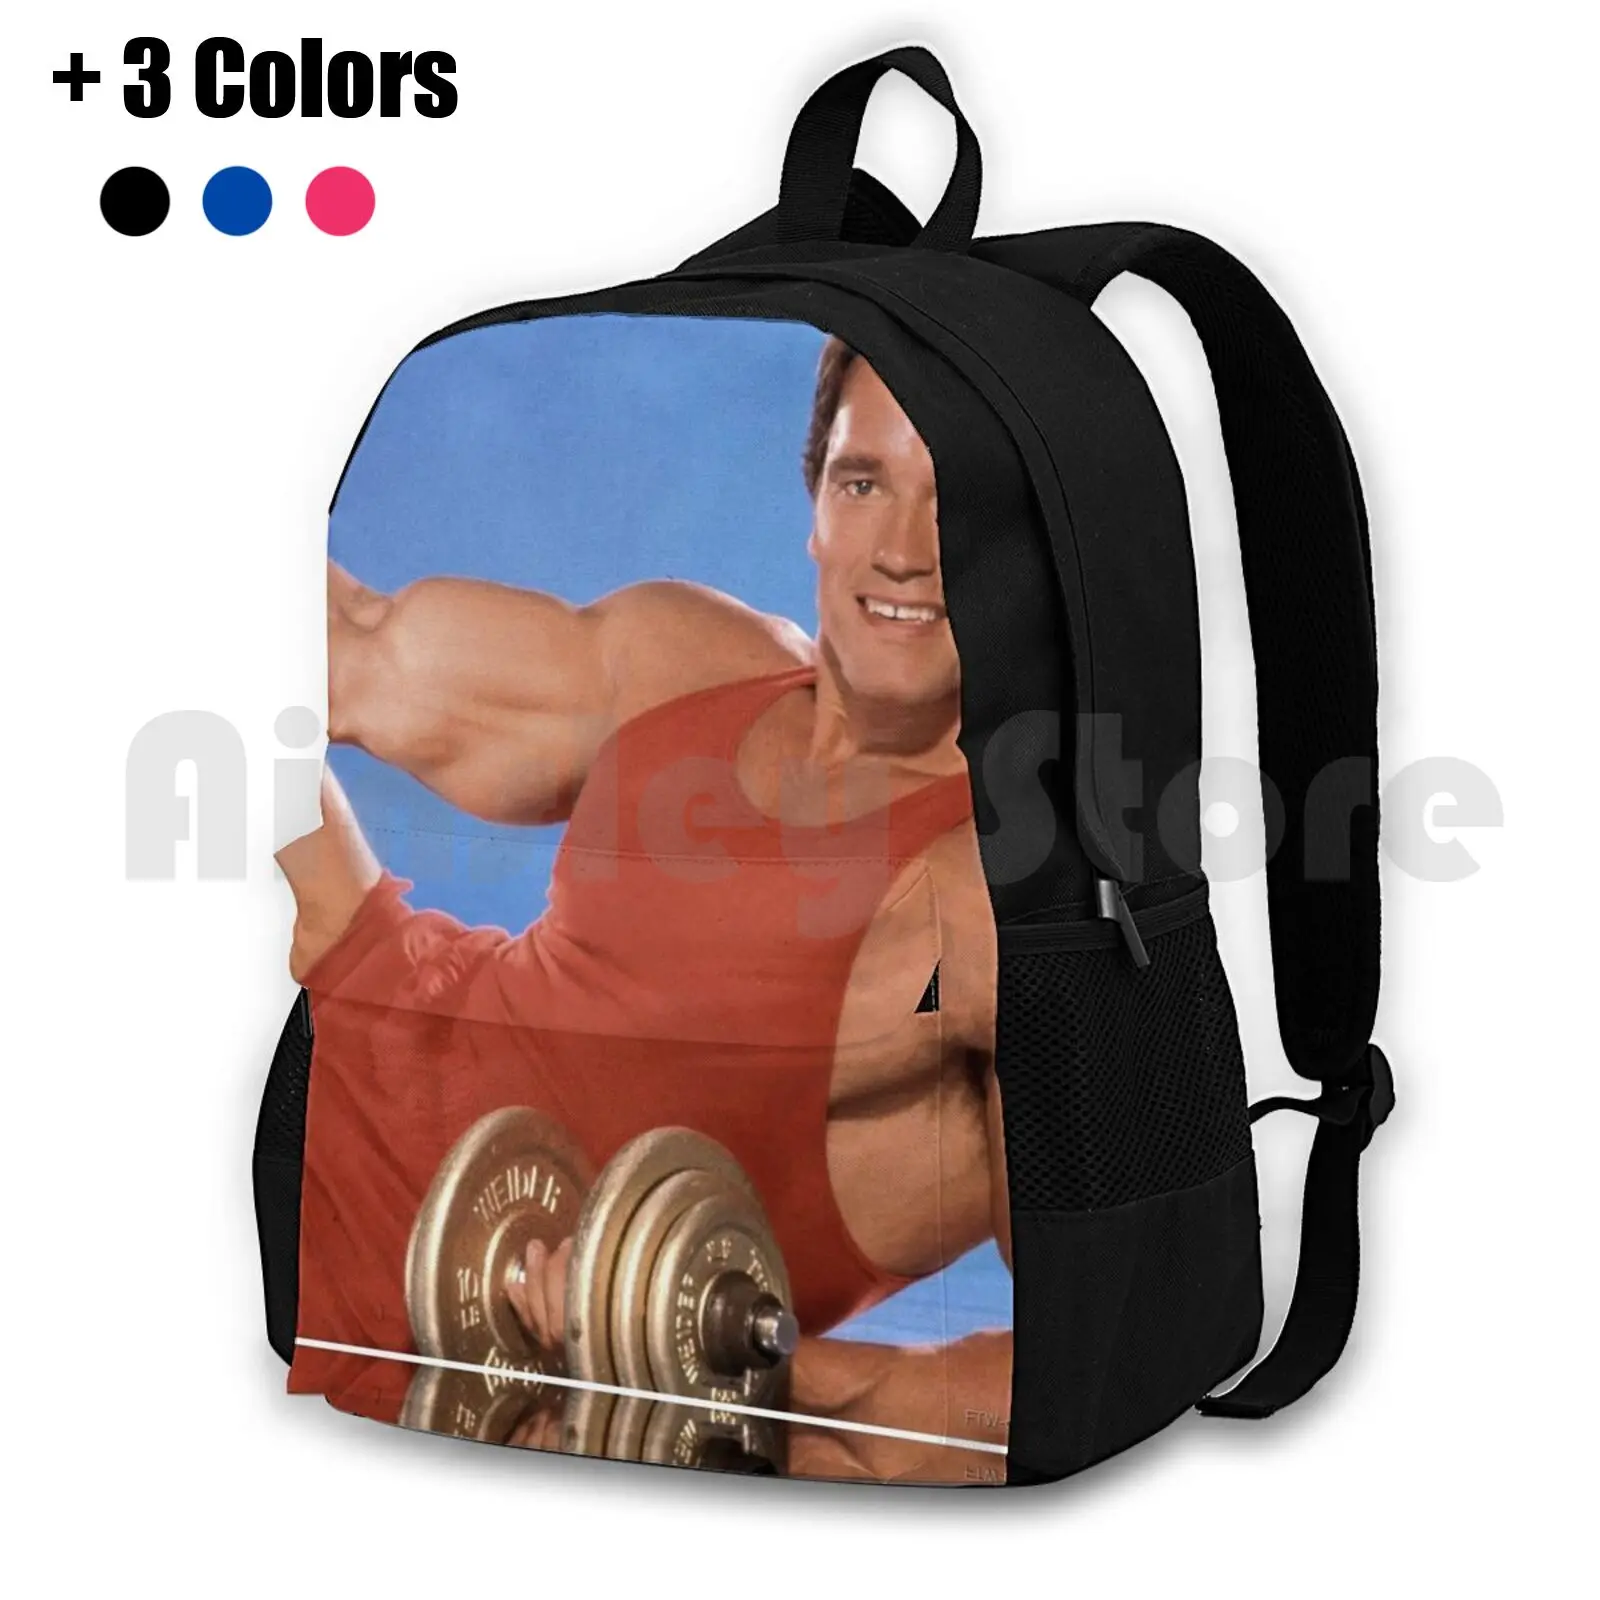 

Arnold Outdoor Hiking Backpack Riding Climbing Sports Bag Schwarzenegger Arnie Guns Gym Bodybuilding Arms Weights Weightlifting